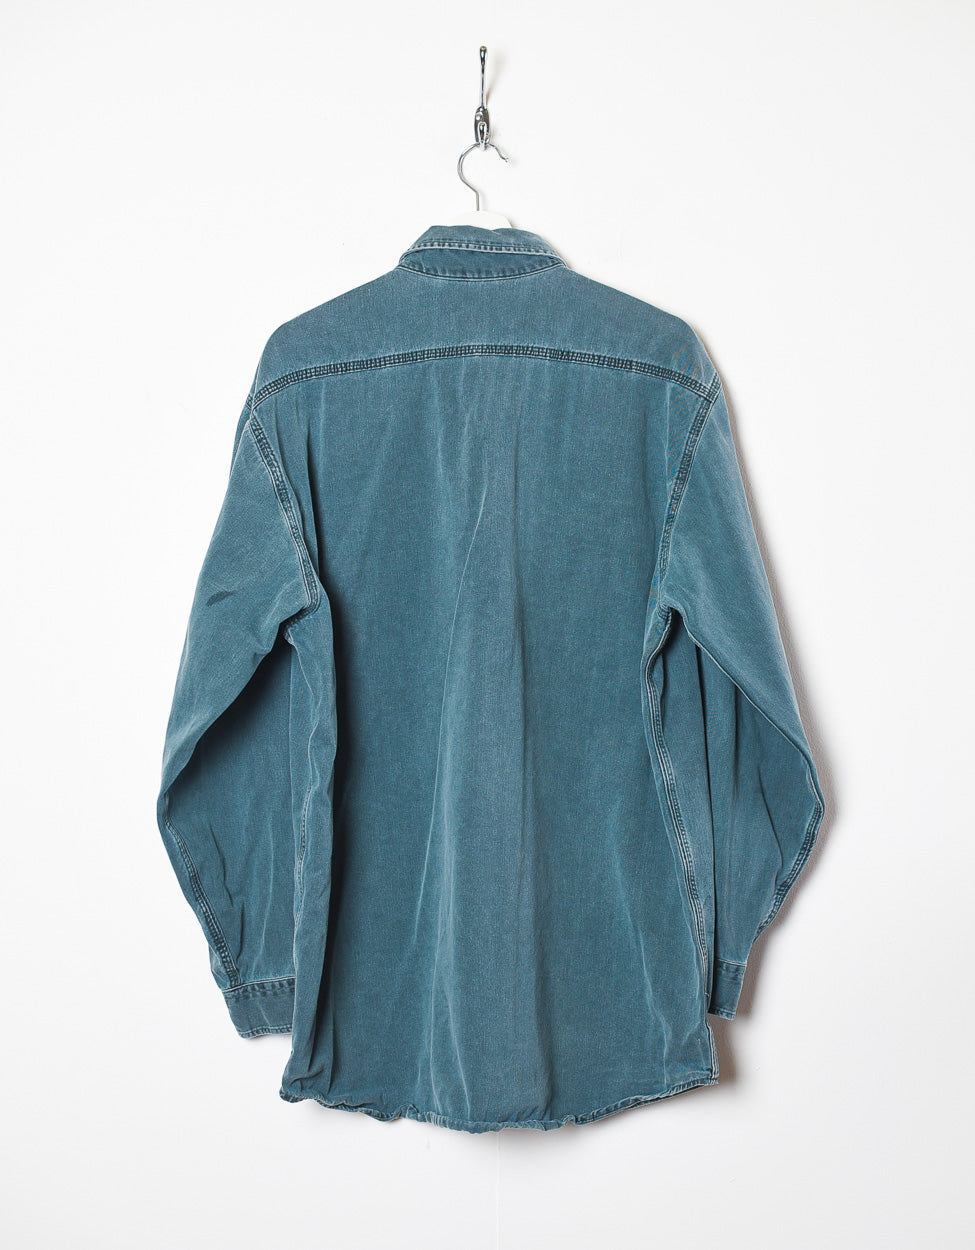 Blue Carhartt Workwear Shirt - X-Large